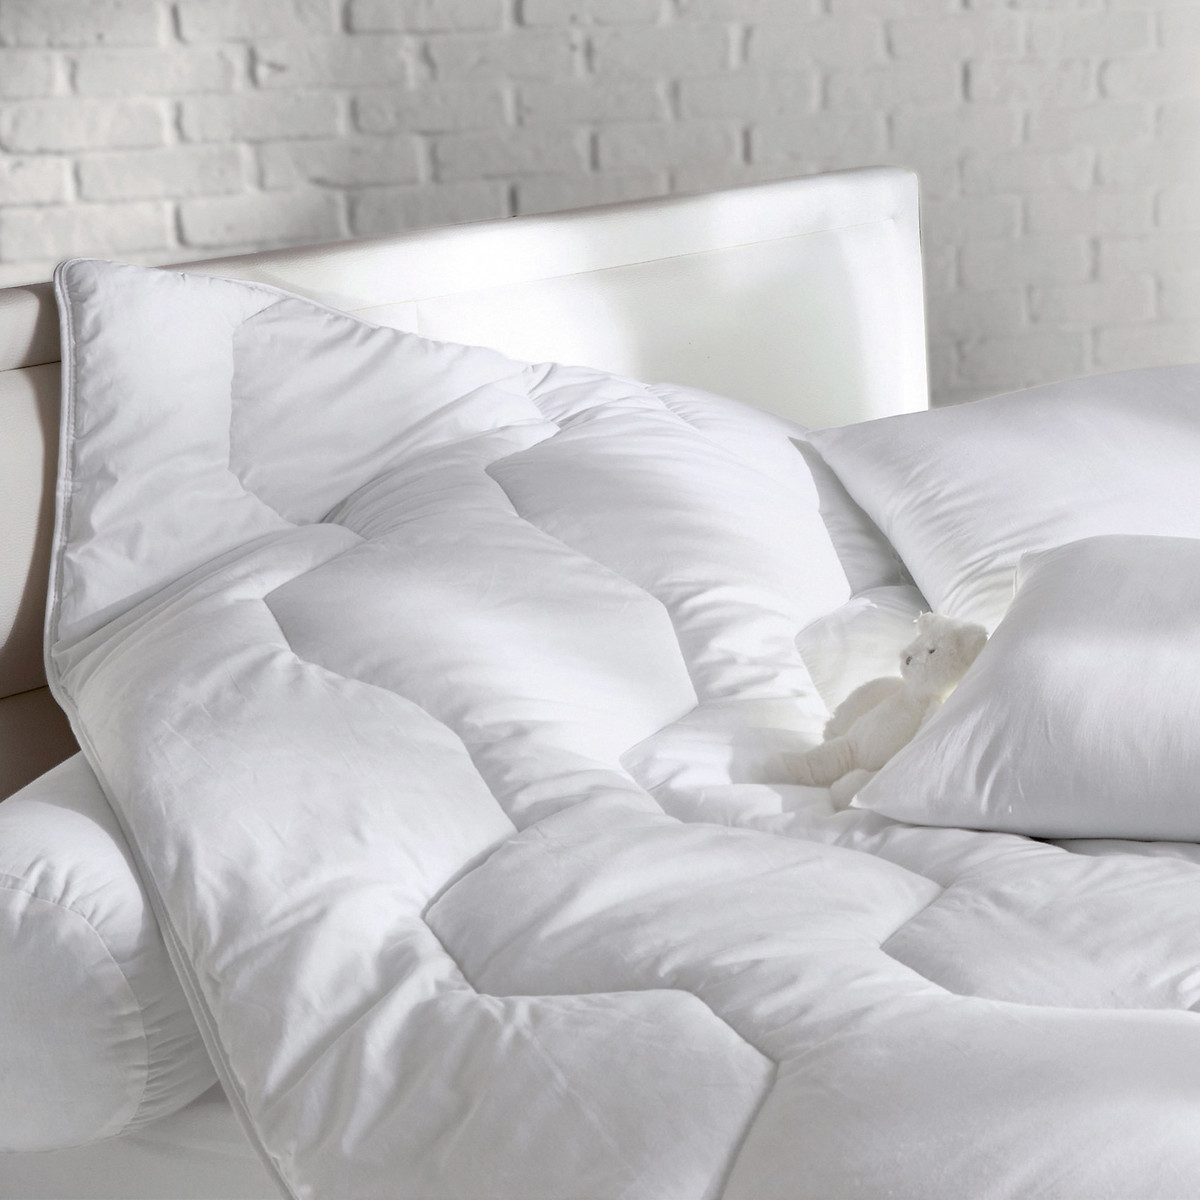 Одеяло LA REDOUTE INTERIEURS LEGERE - с пропиткой от комаров 240 x 220 см белый, размер 240 x 220 см - фото 1